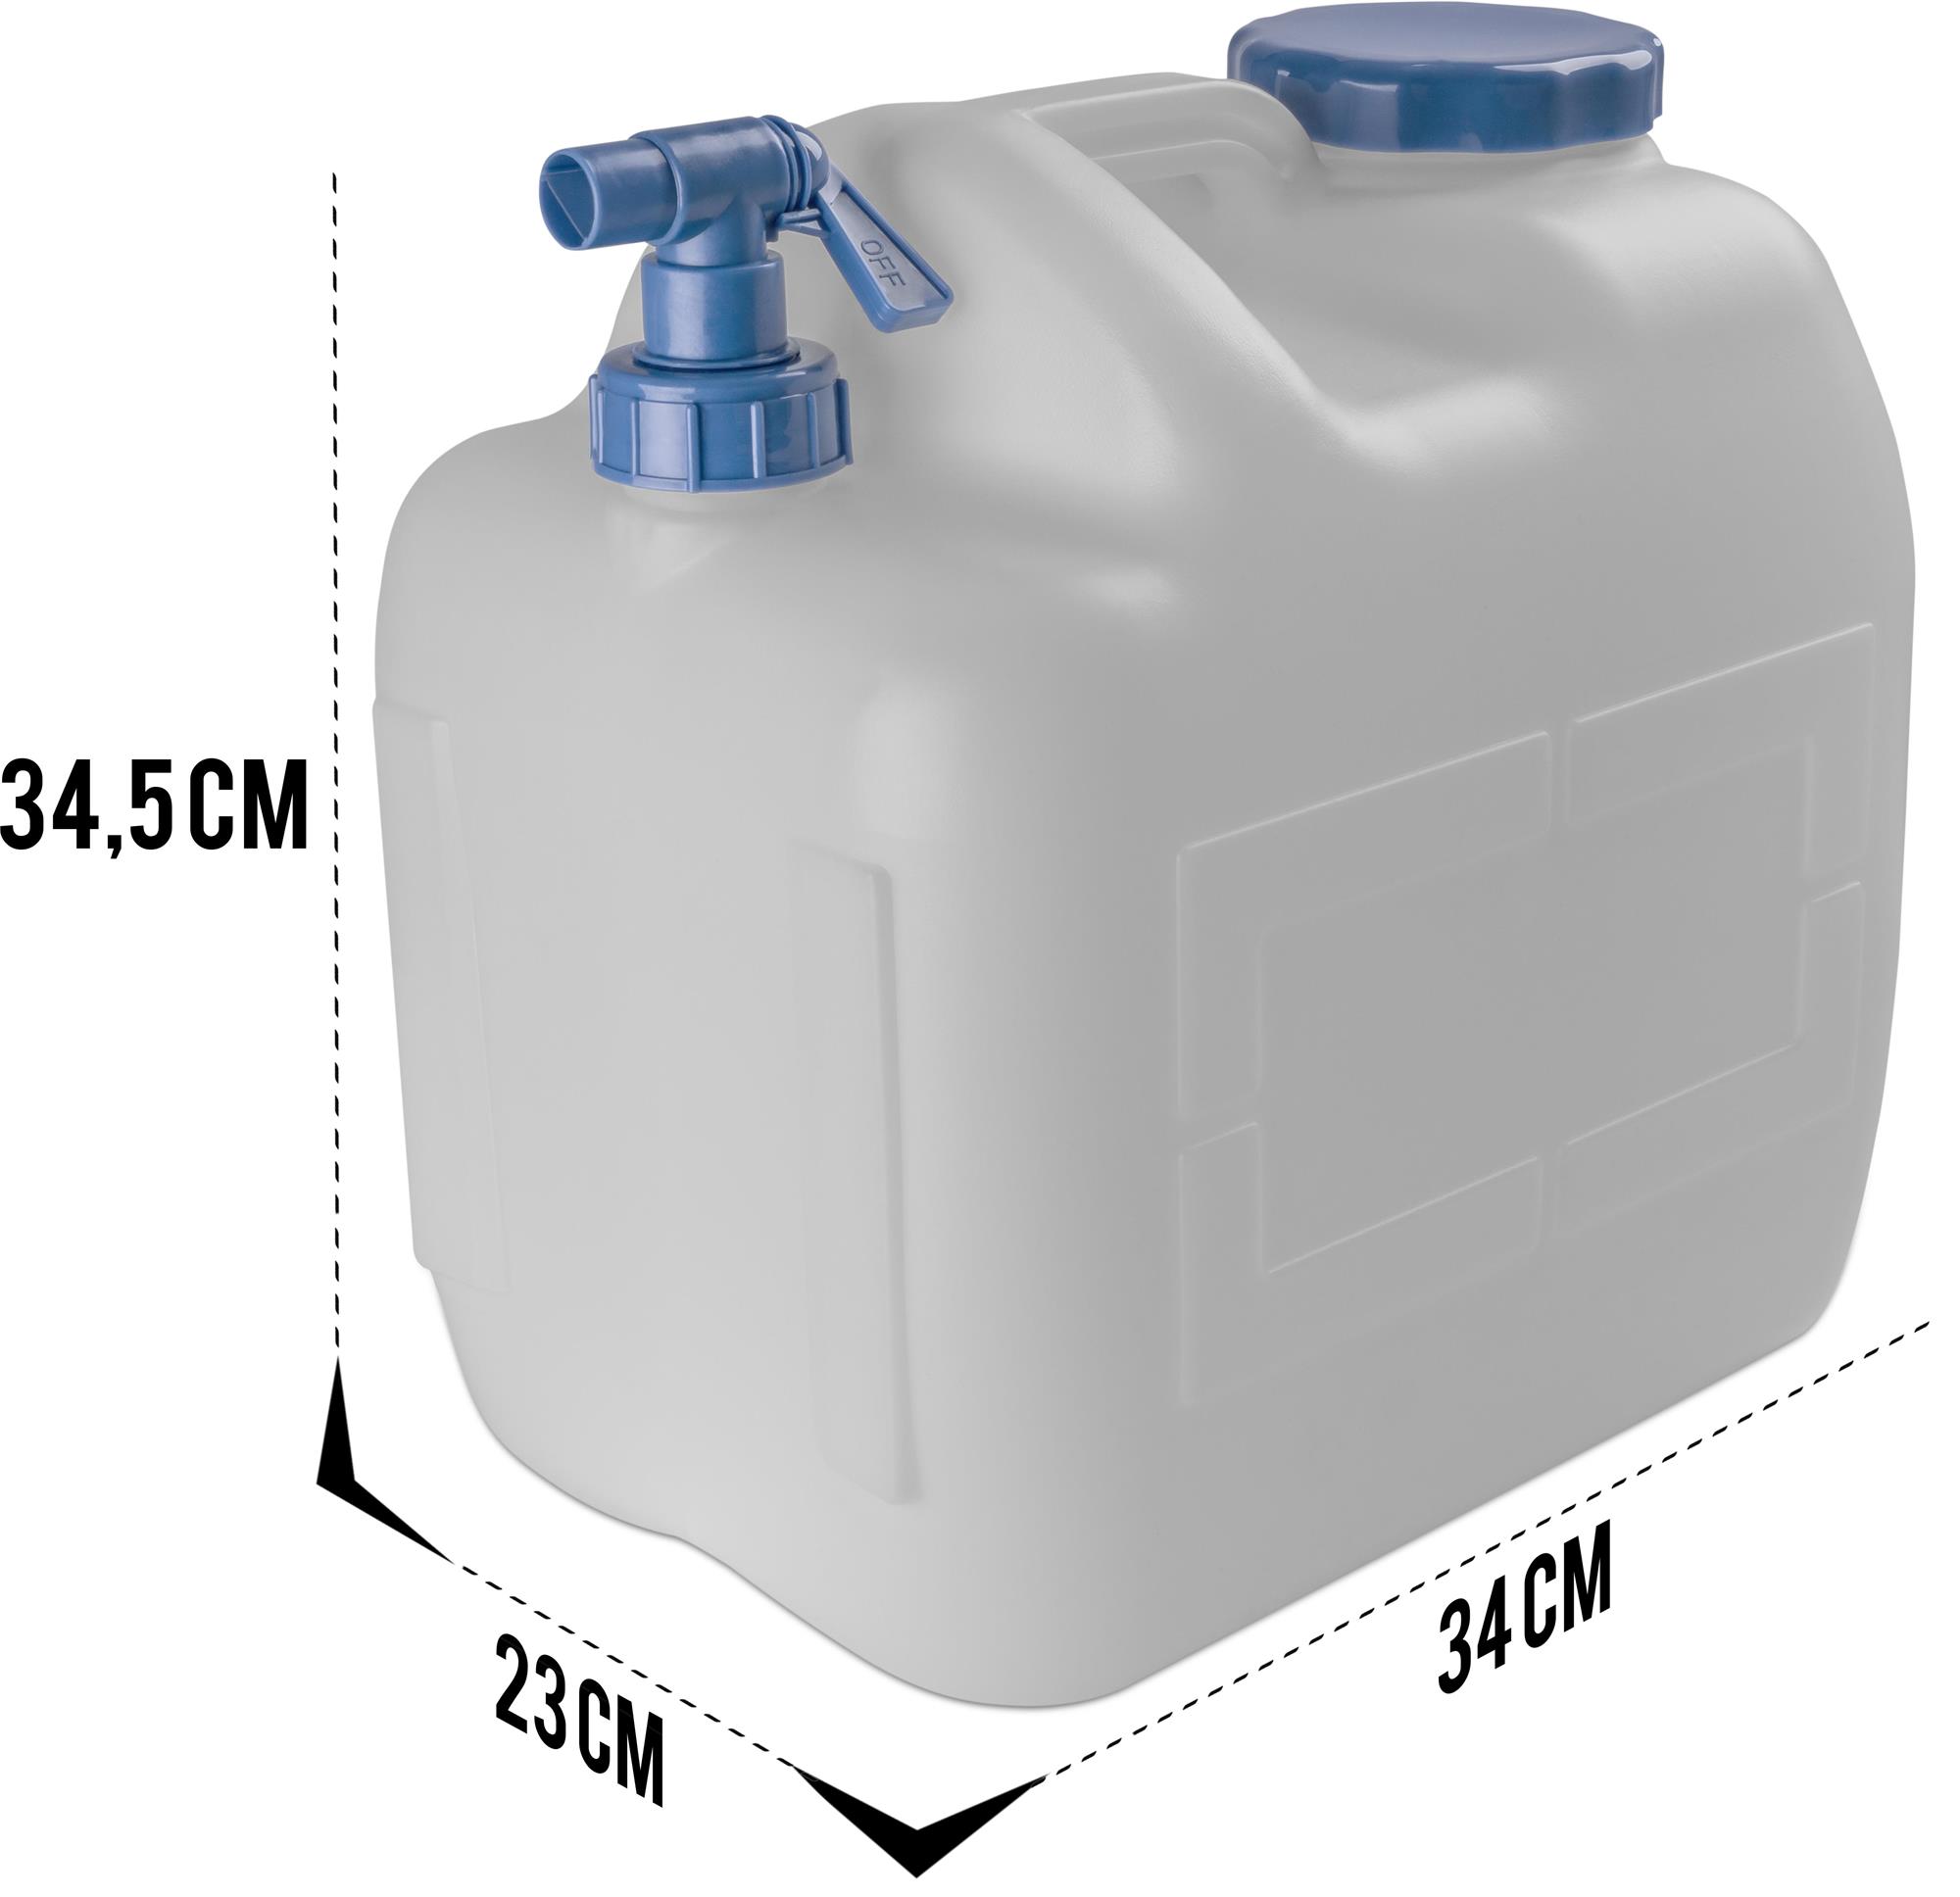 Leiyini Wasserkanister Tragbarer Eimer Wasserspender Trinkwasserkanister & Wasserbehälter zur Wasser Aufbewahrung